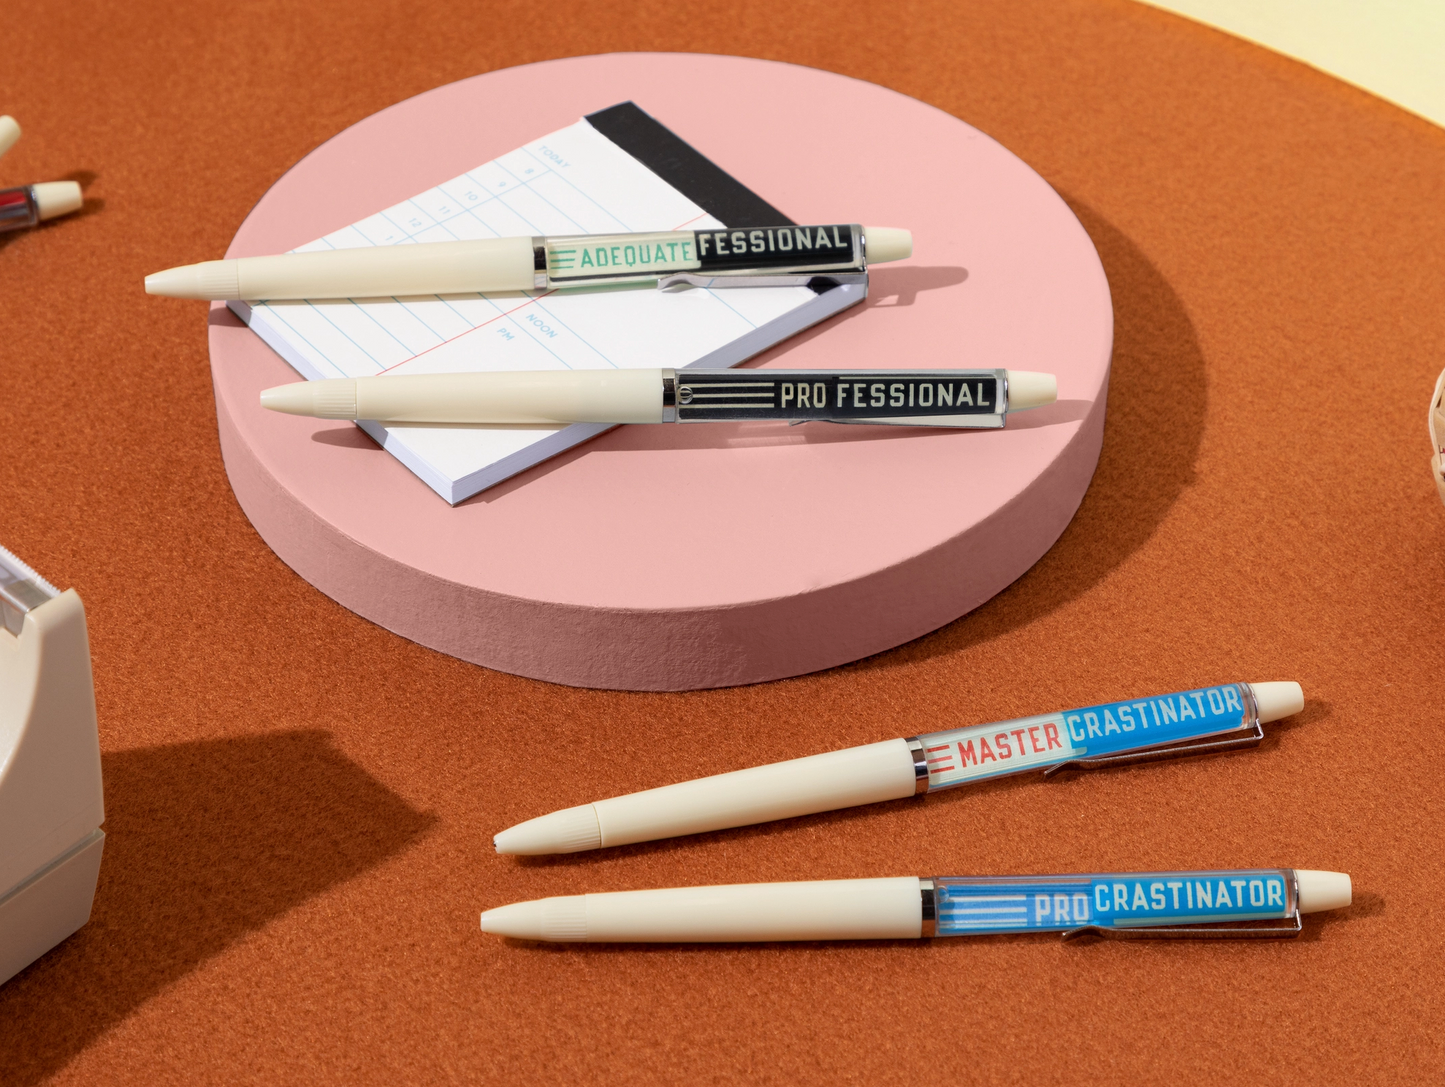 Professional Procrastinator Floaty Pen Set - Includes 2 pens